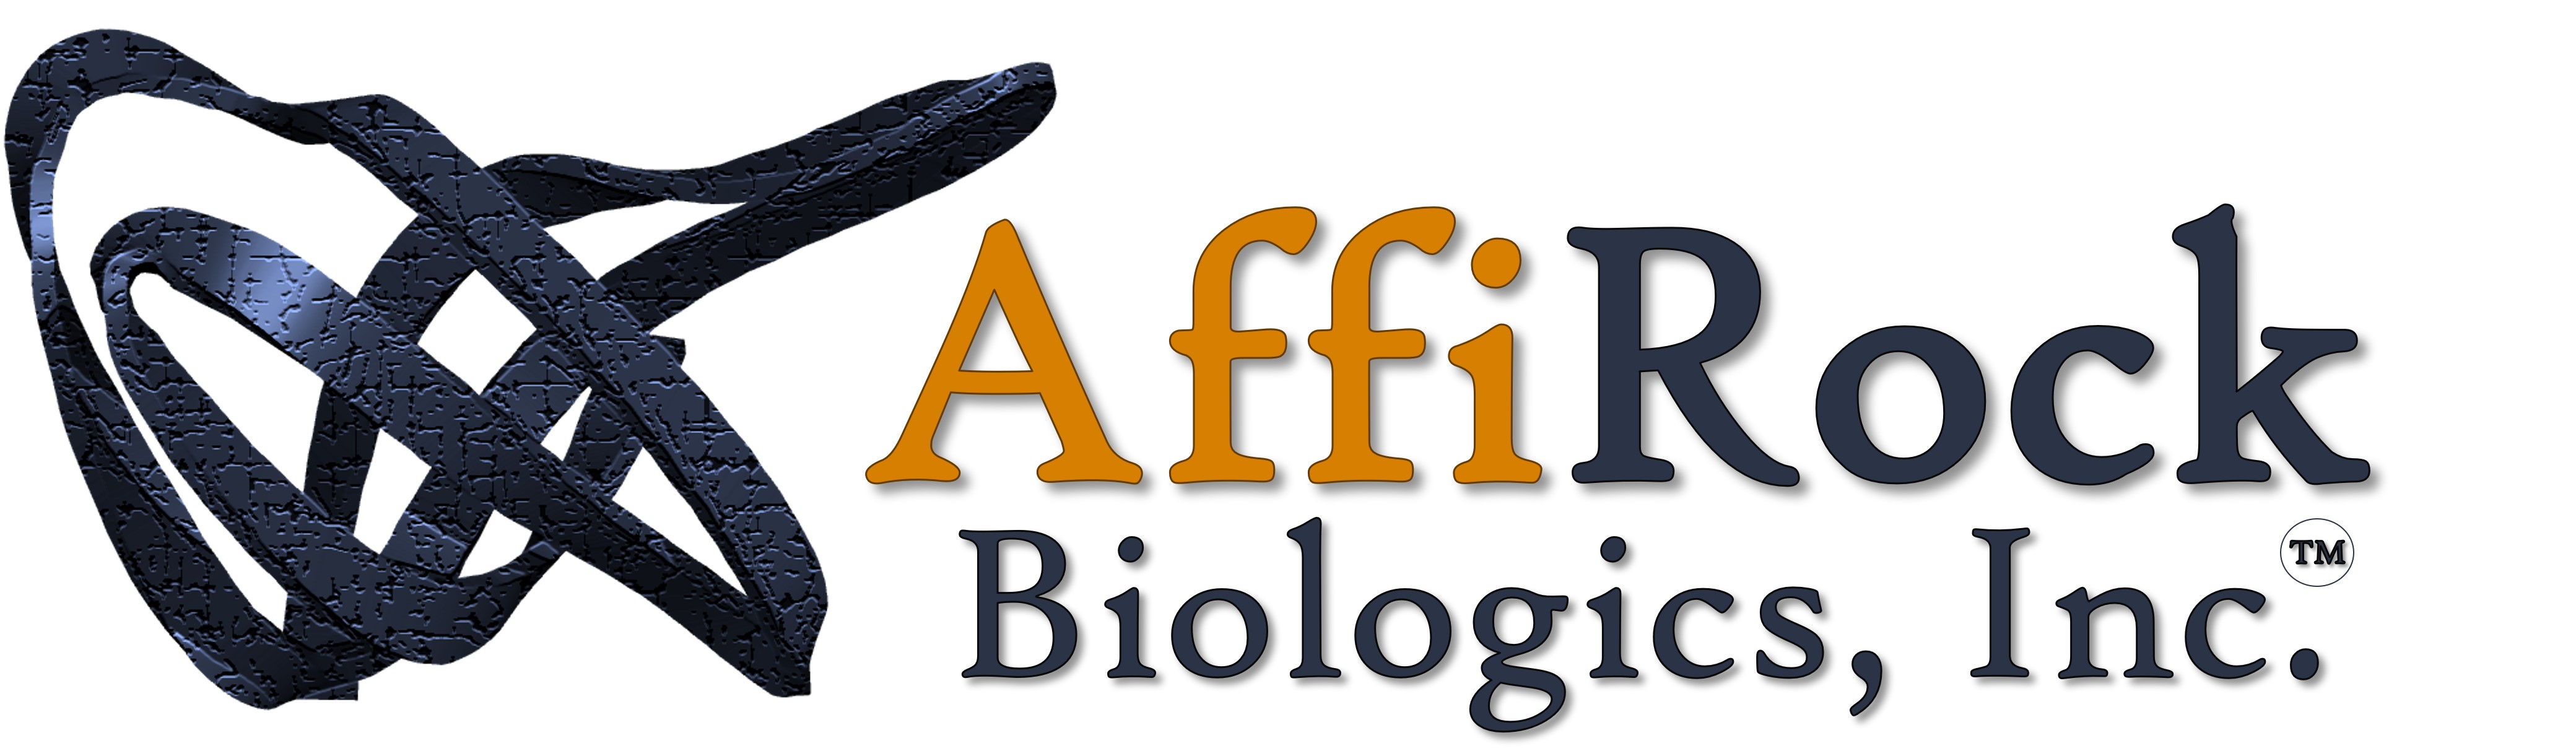 AffiRock Biologics